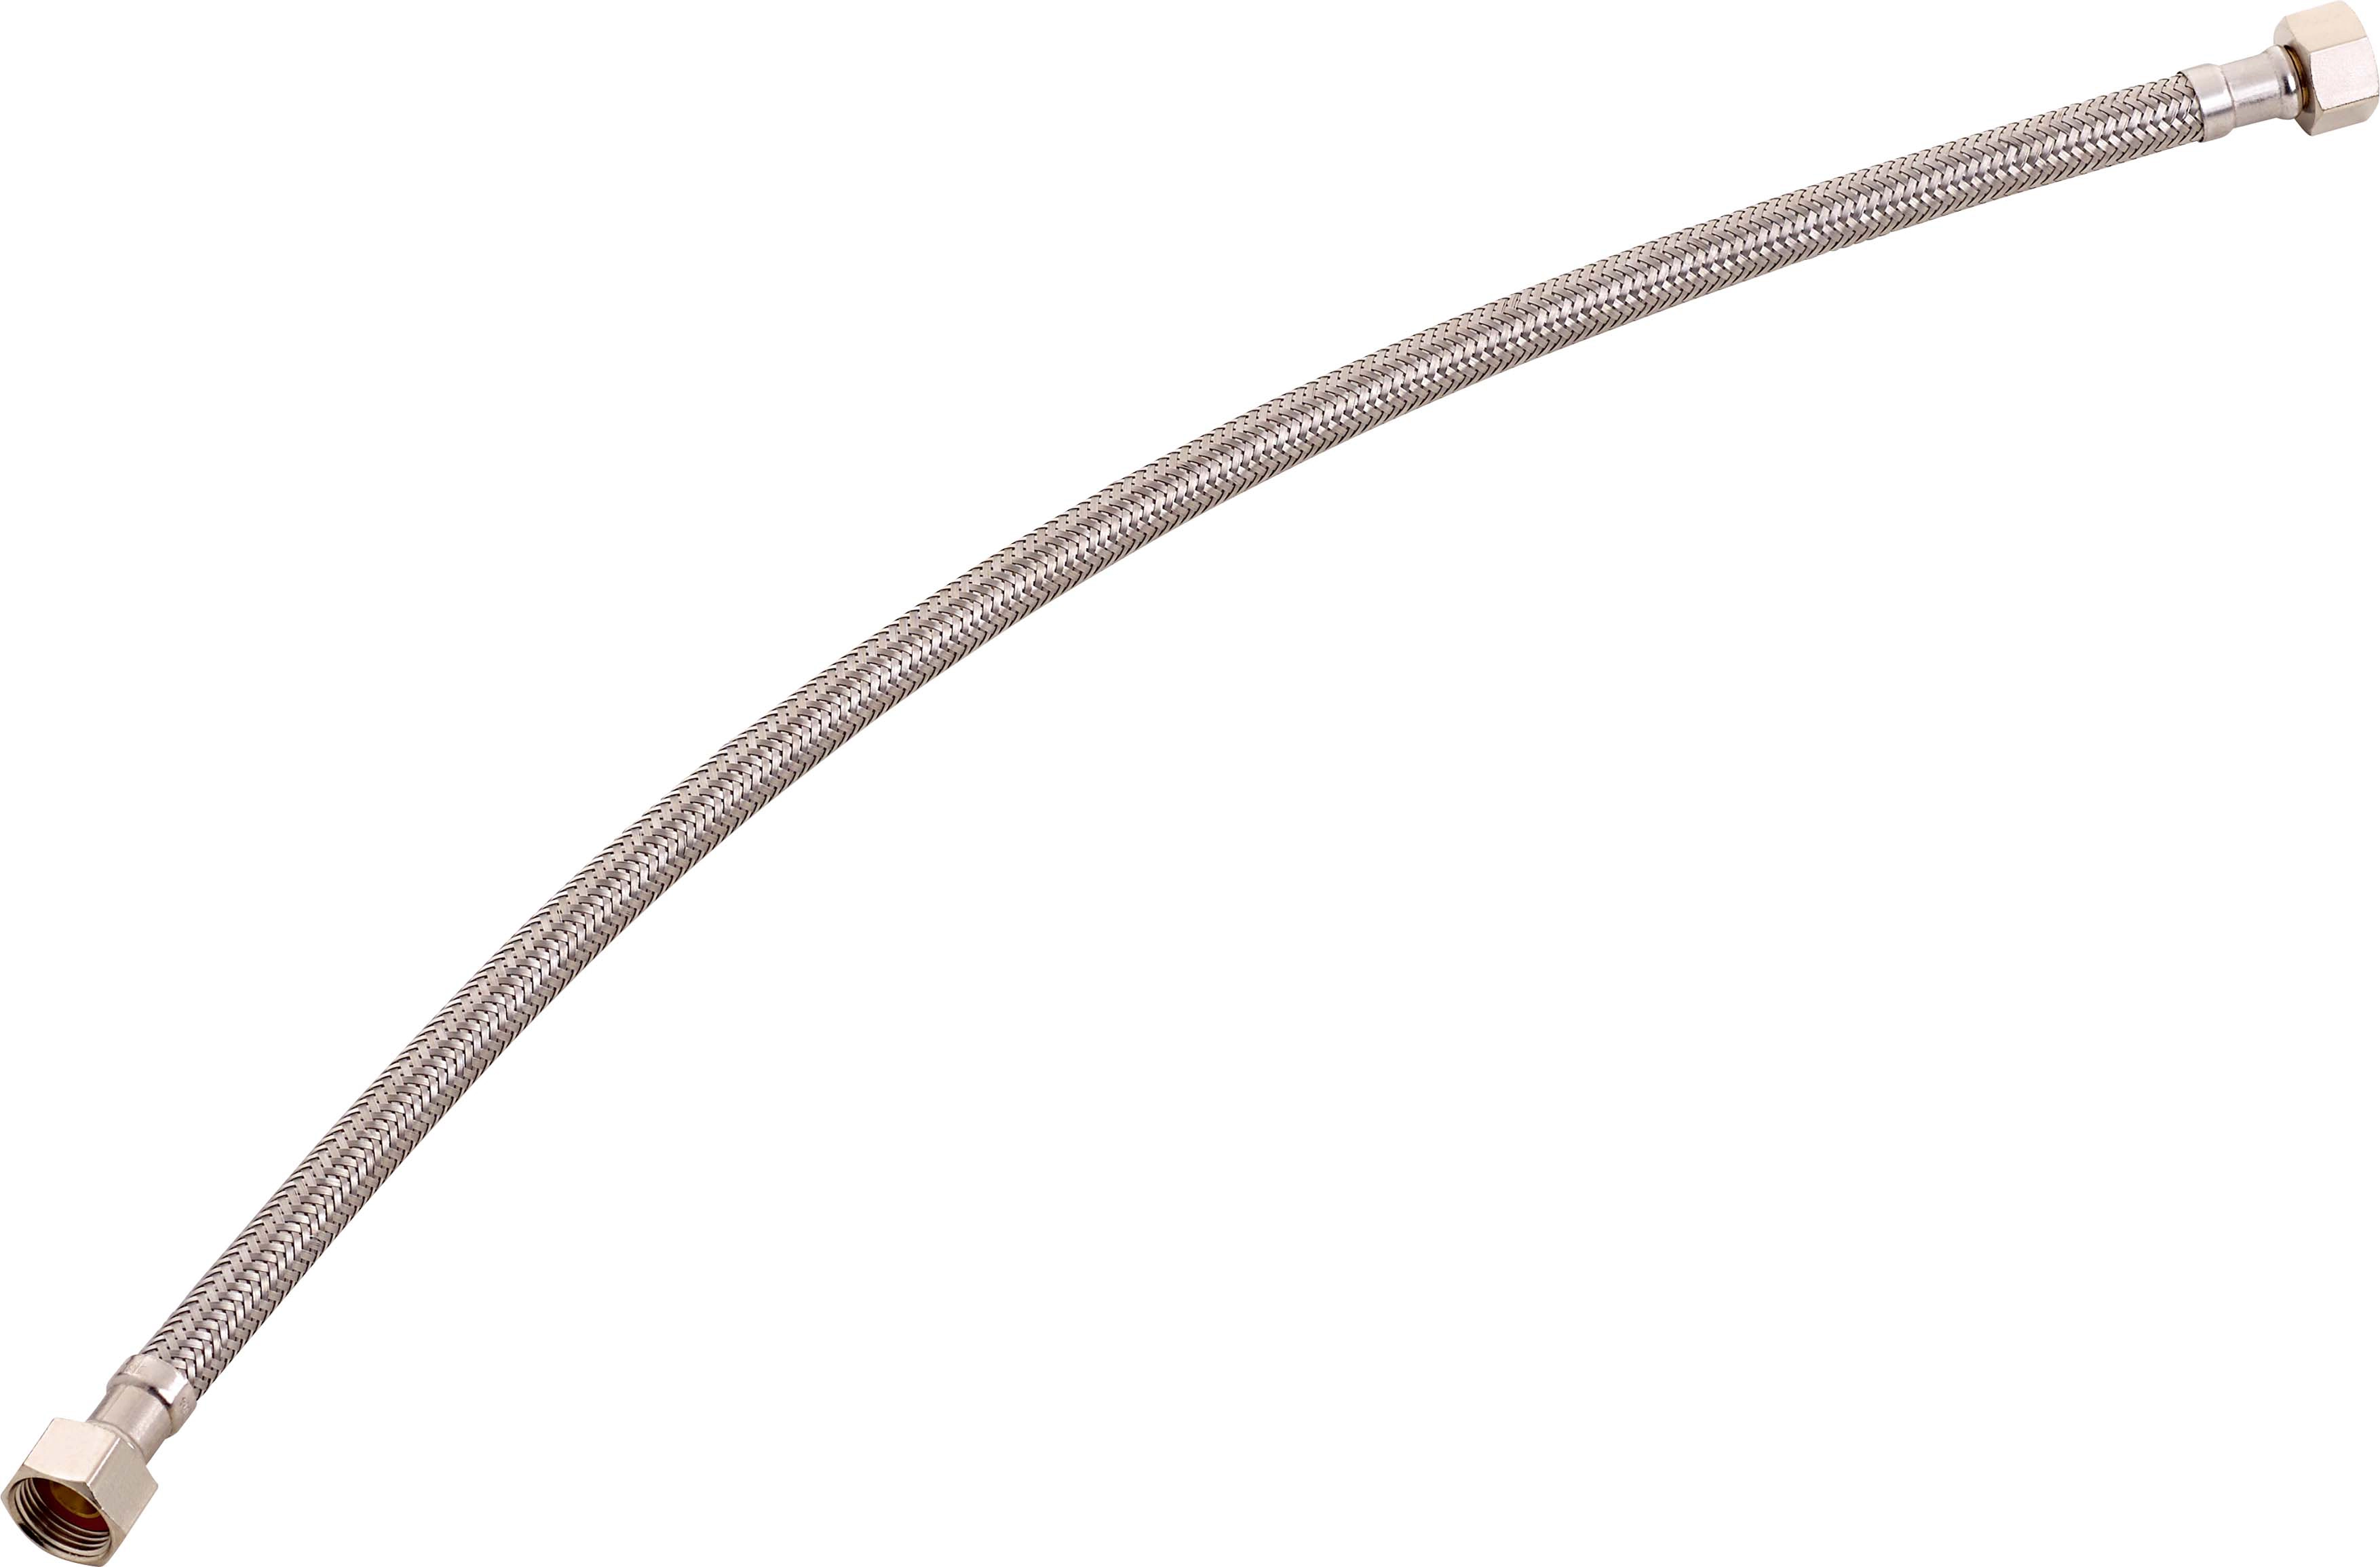 Tuyau de raccordement flexible angulaire 14,9 mm (G 3/8) / longueur 300 mm